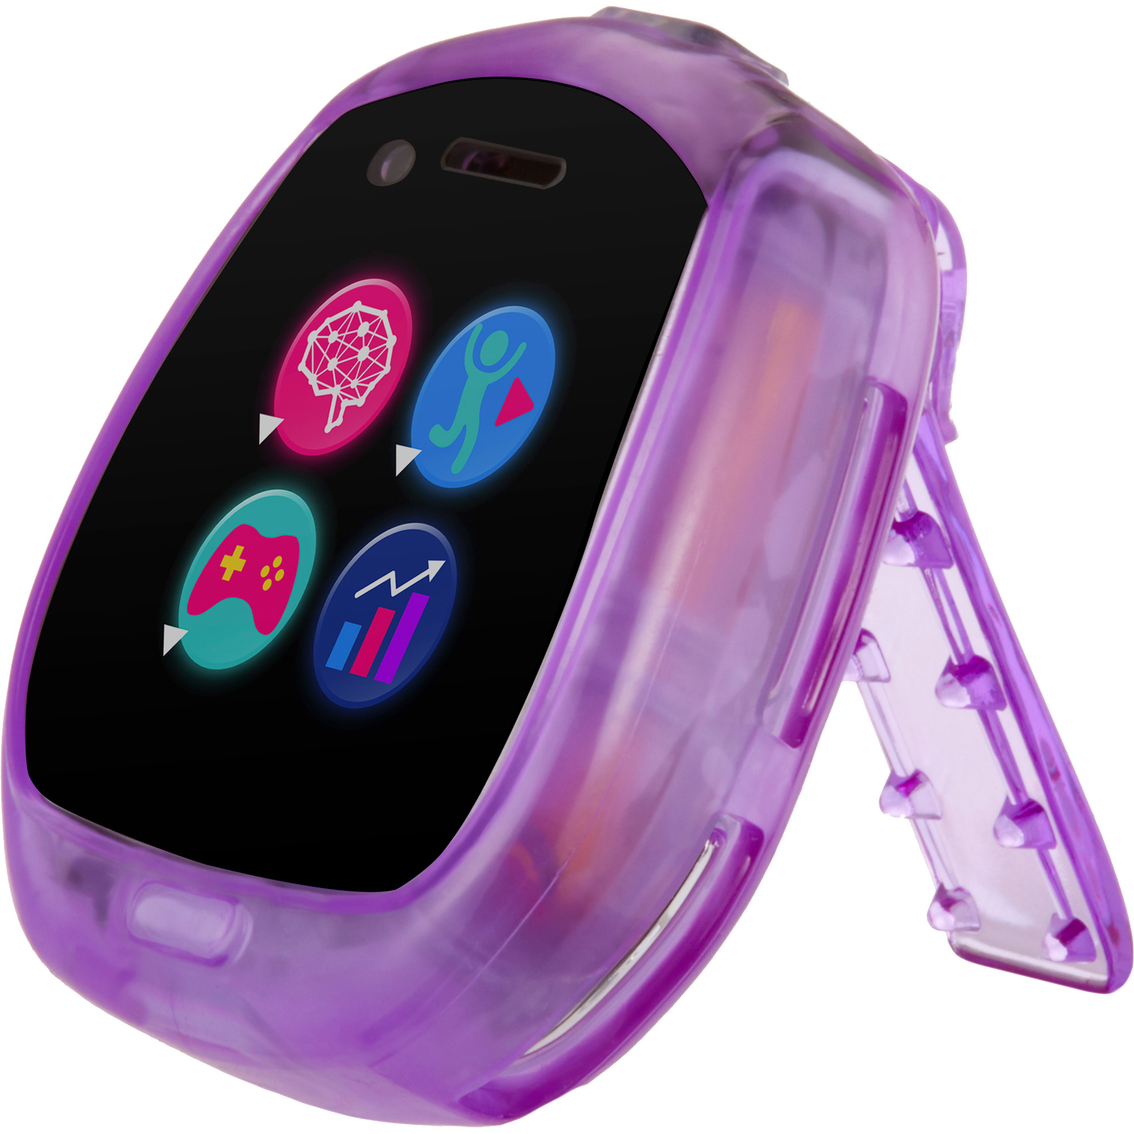 Little Tikes Tobi 2 Robot Smartwatch Purple - Image 3 of 7